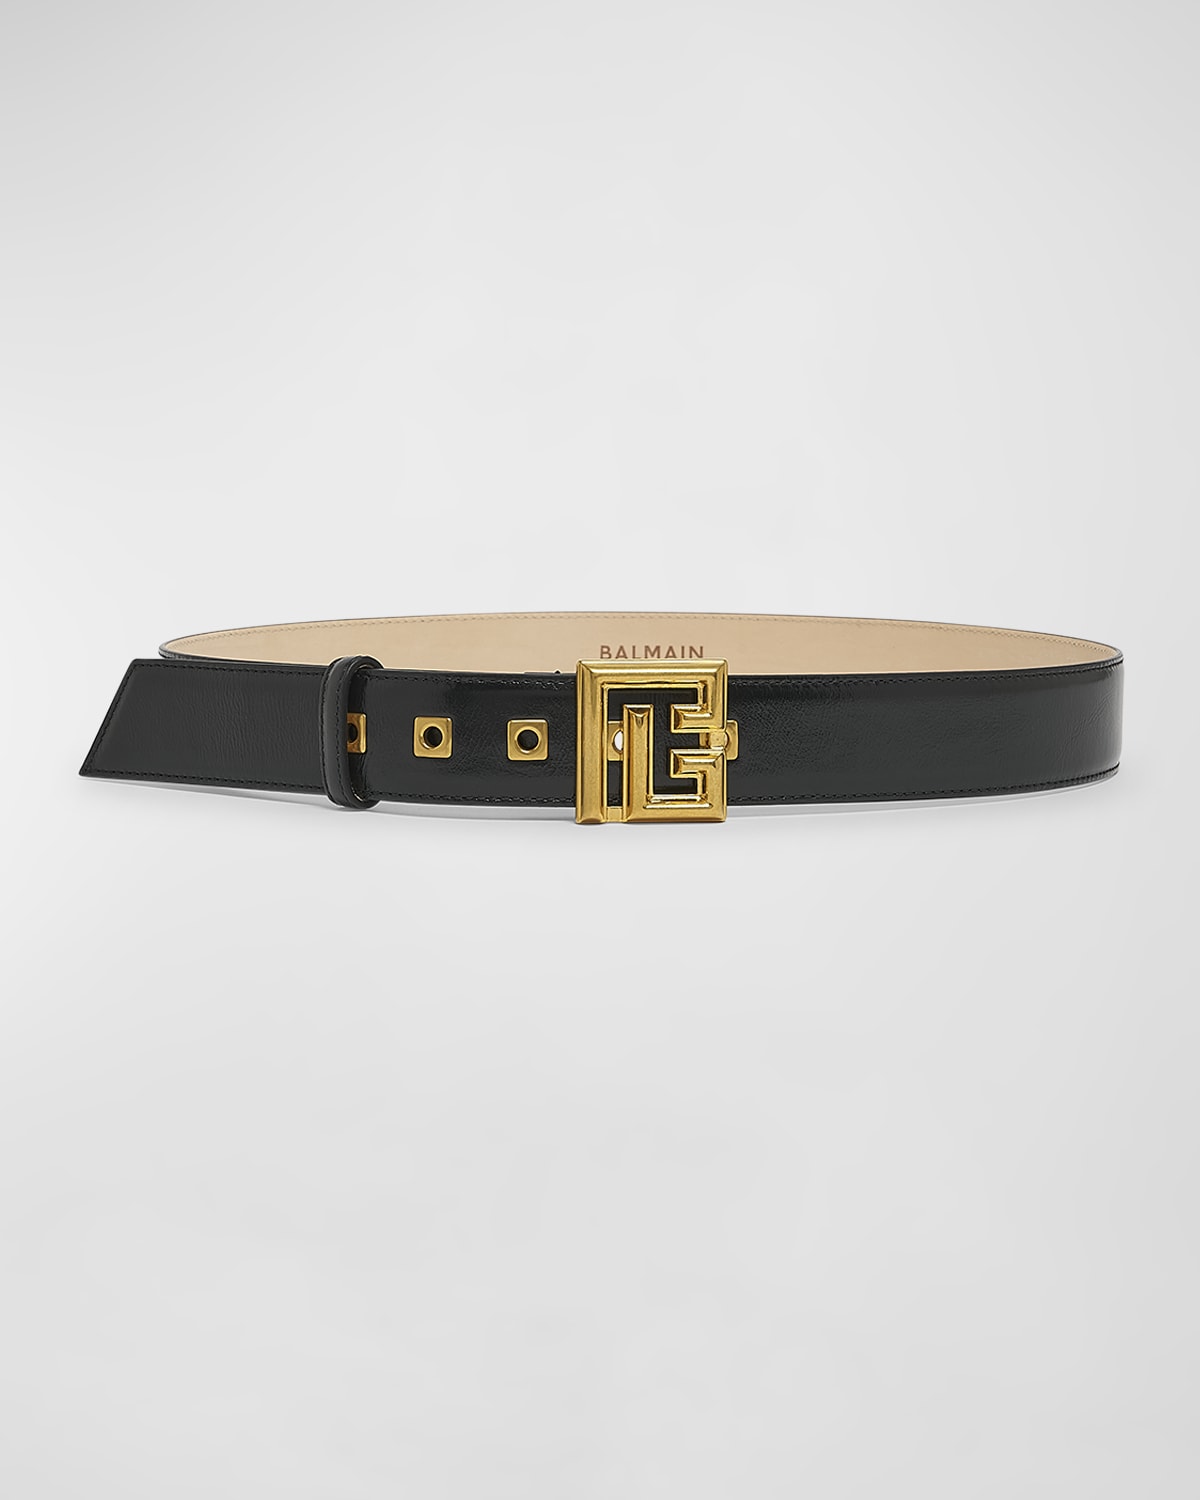 Balmain Pb Monogram Patent Leather Belt In 0pa Noir